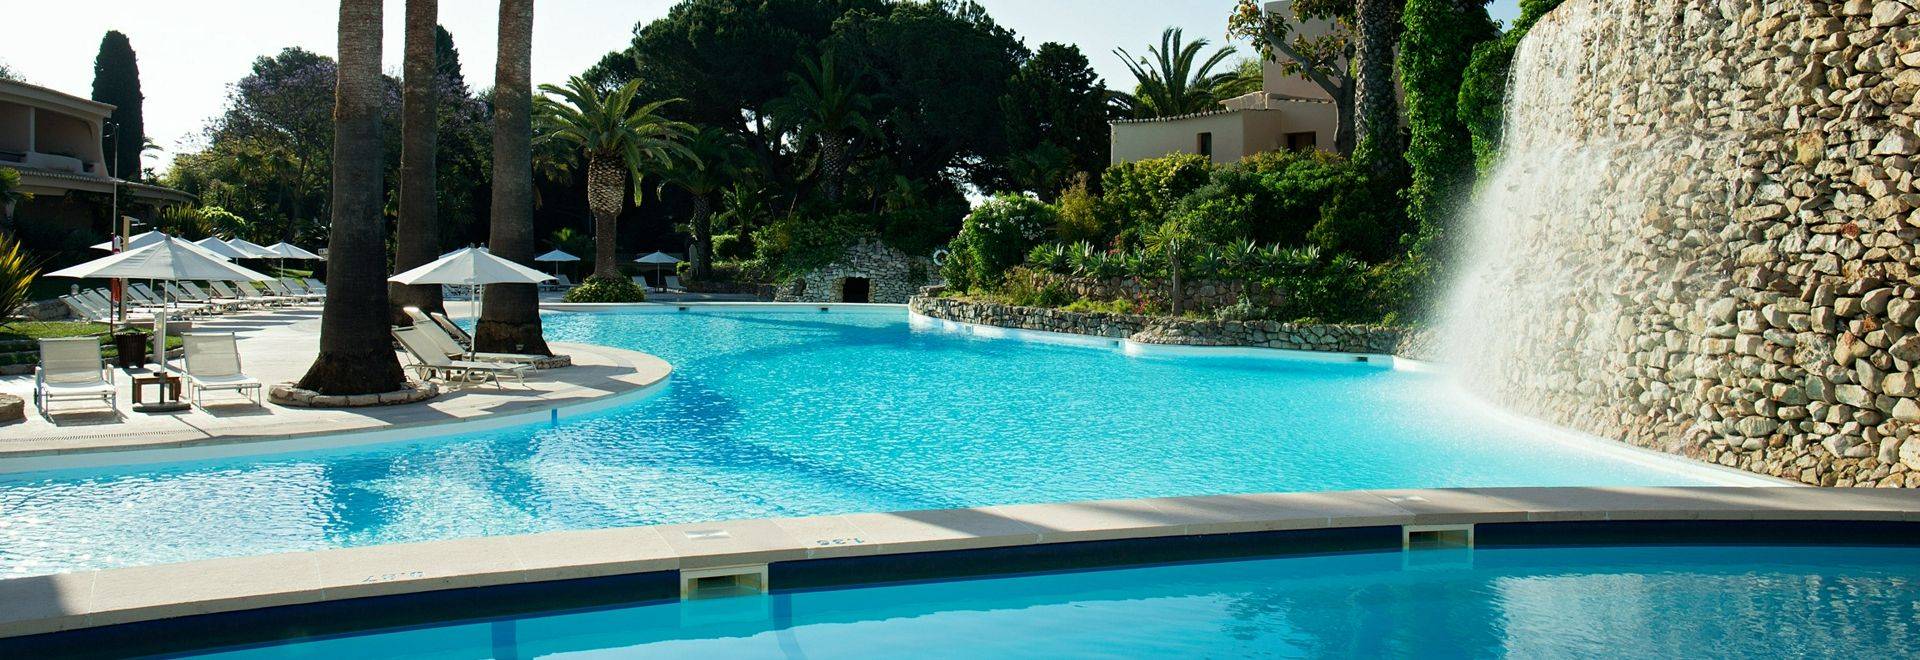 Vilalara-Thalassa-Resort-swimming-pool.jpg